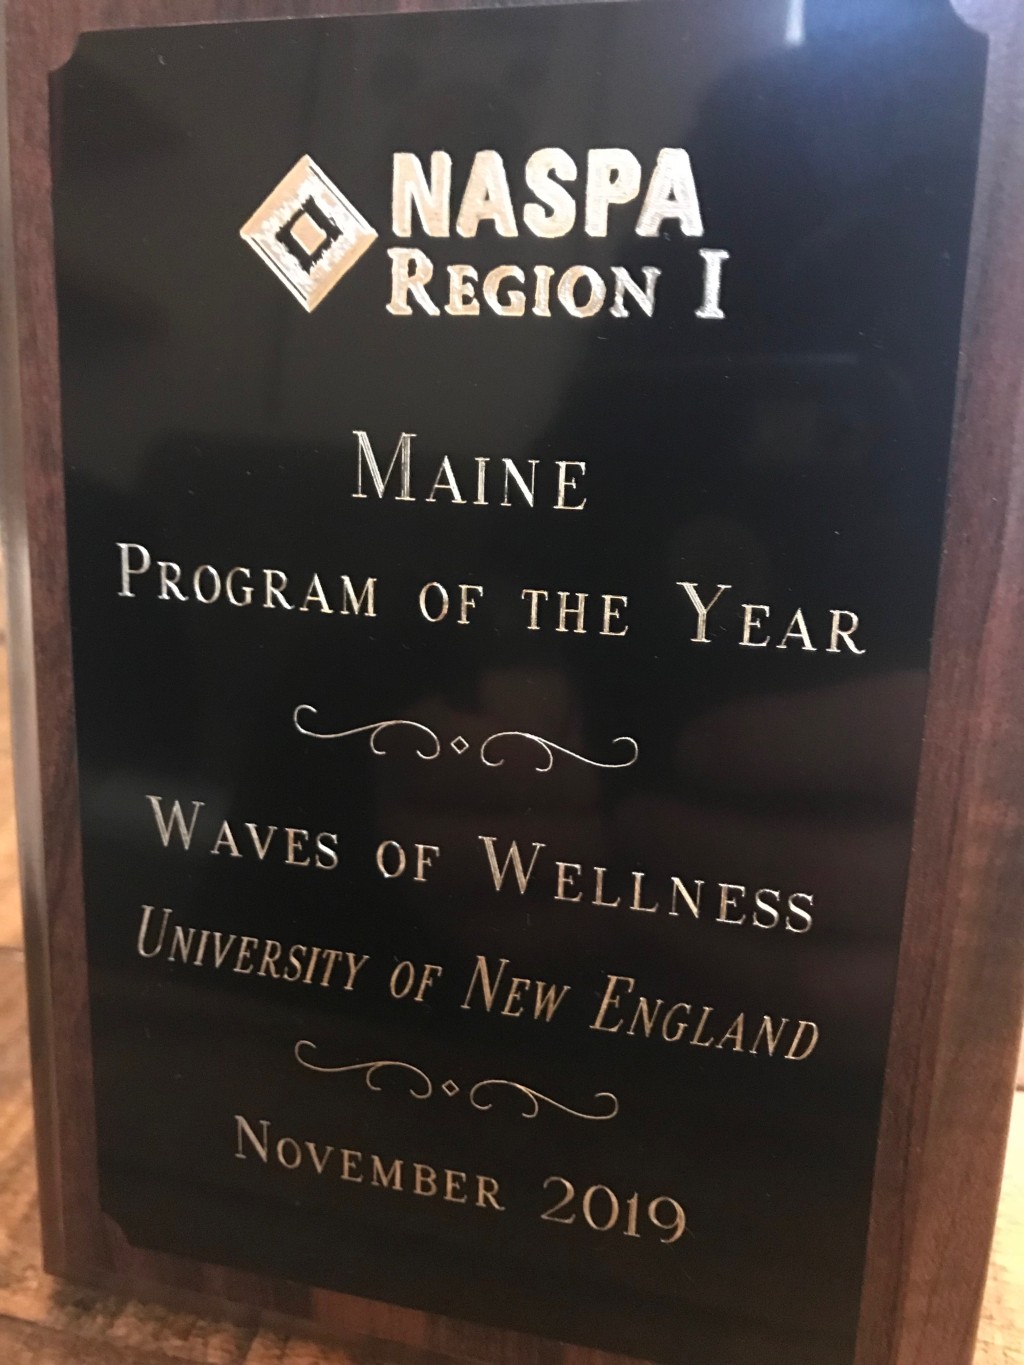 Plaque recognizing UNE's award-winning Waves of Wellness program